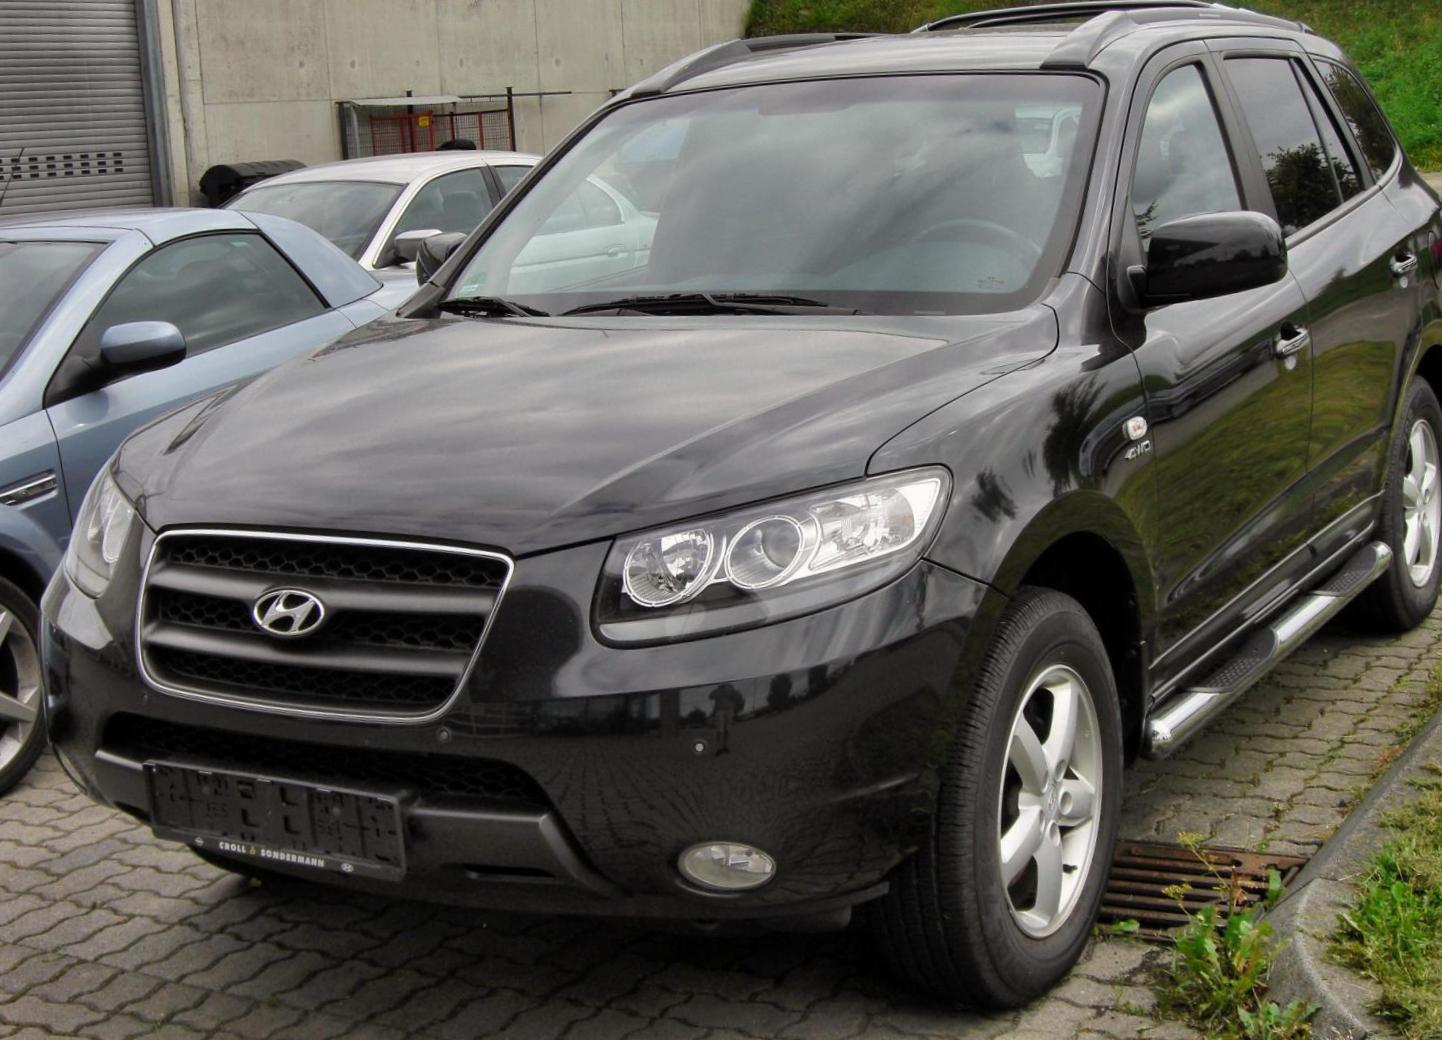 Hyundai Santa Fe Specifications 2014